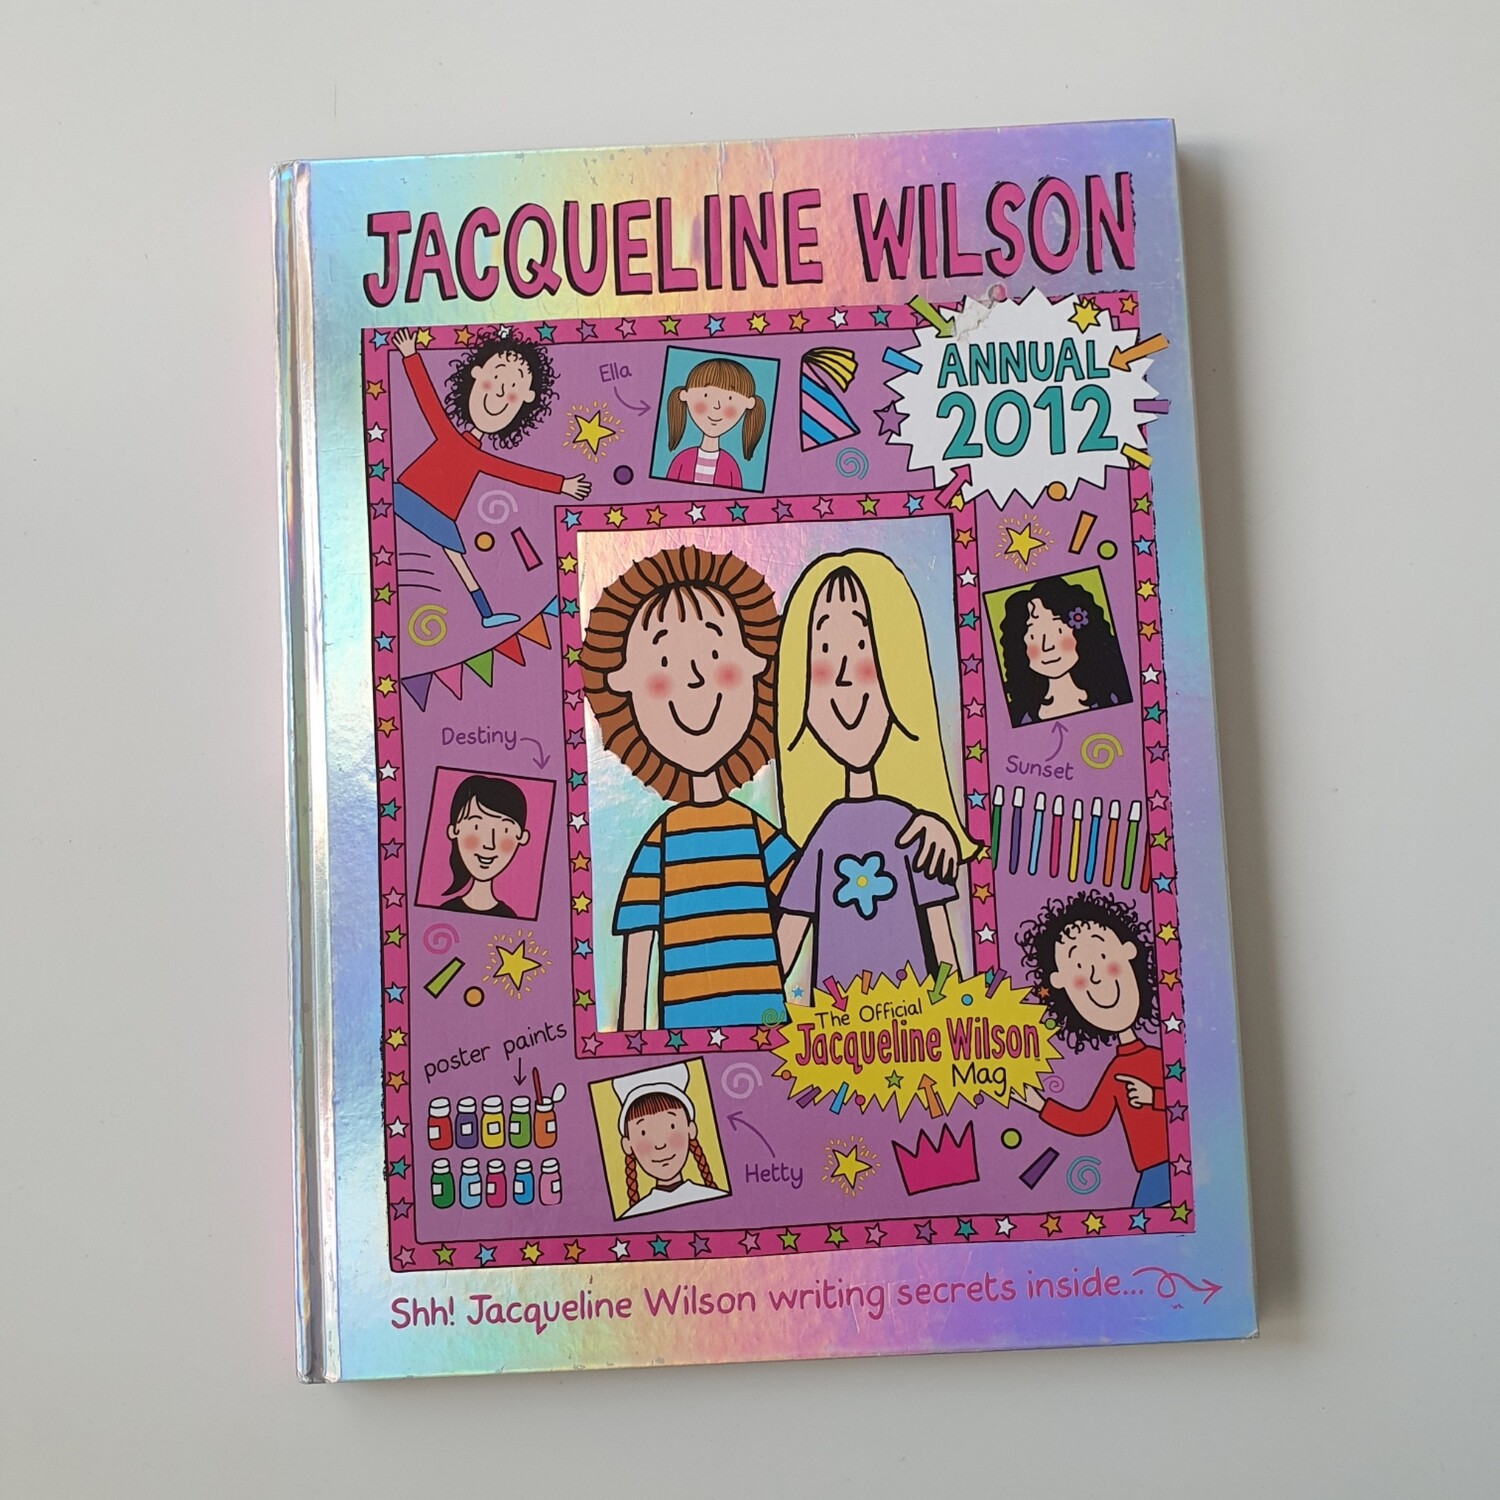 Jacqueline Wilson 2012 Annual - hologram cover